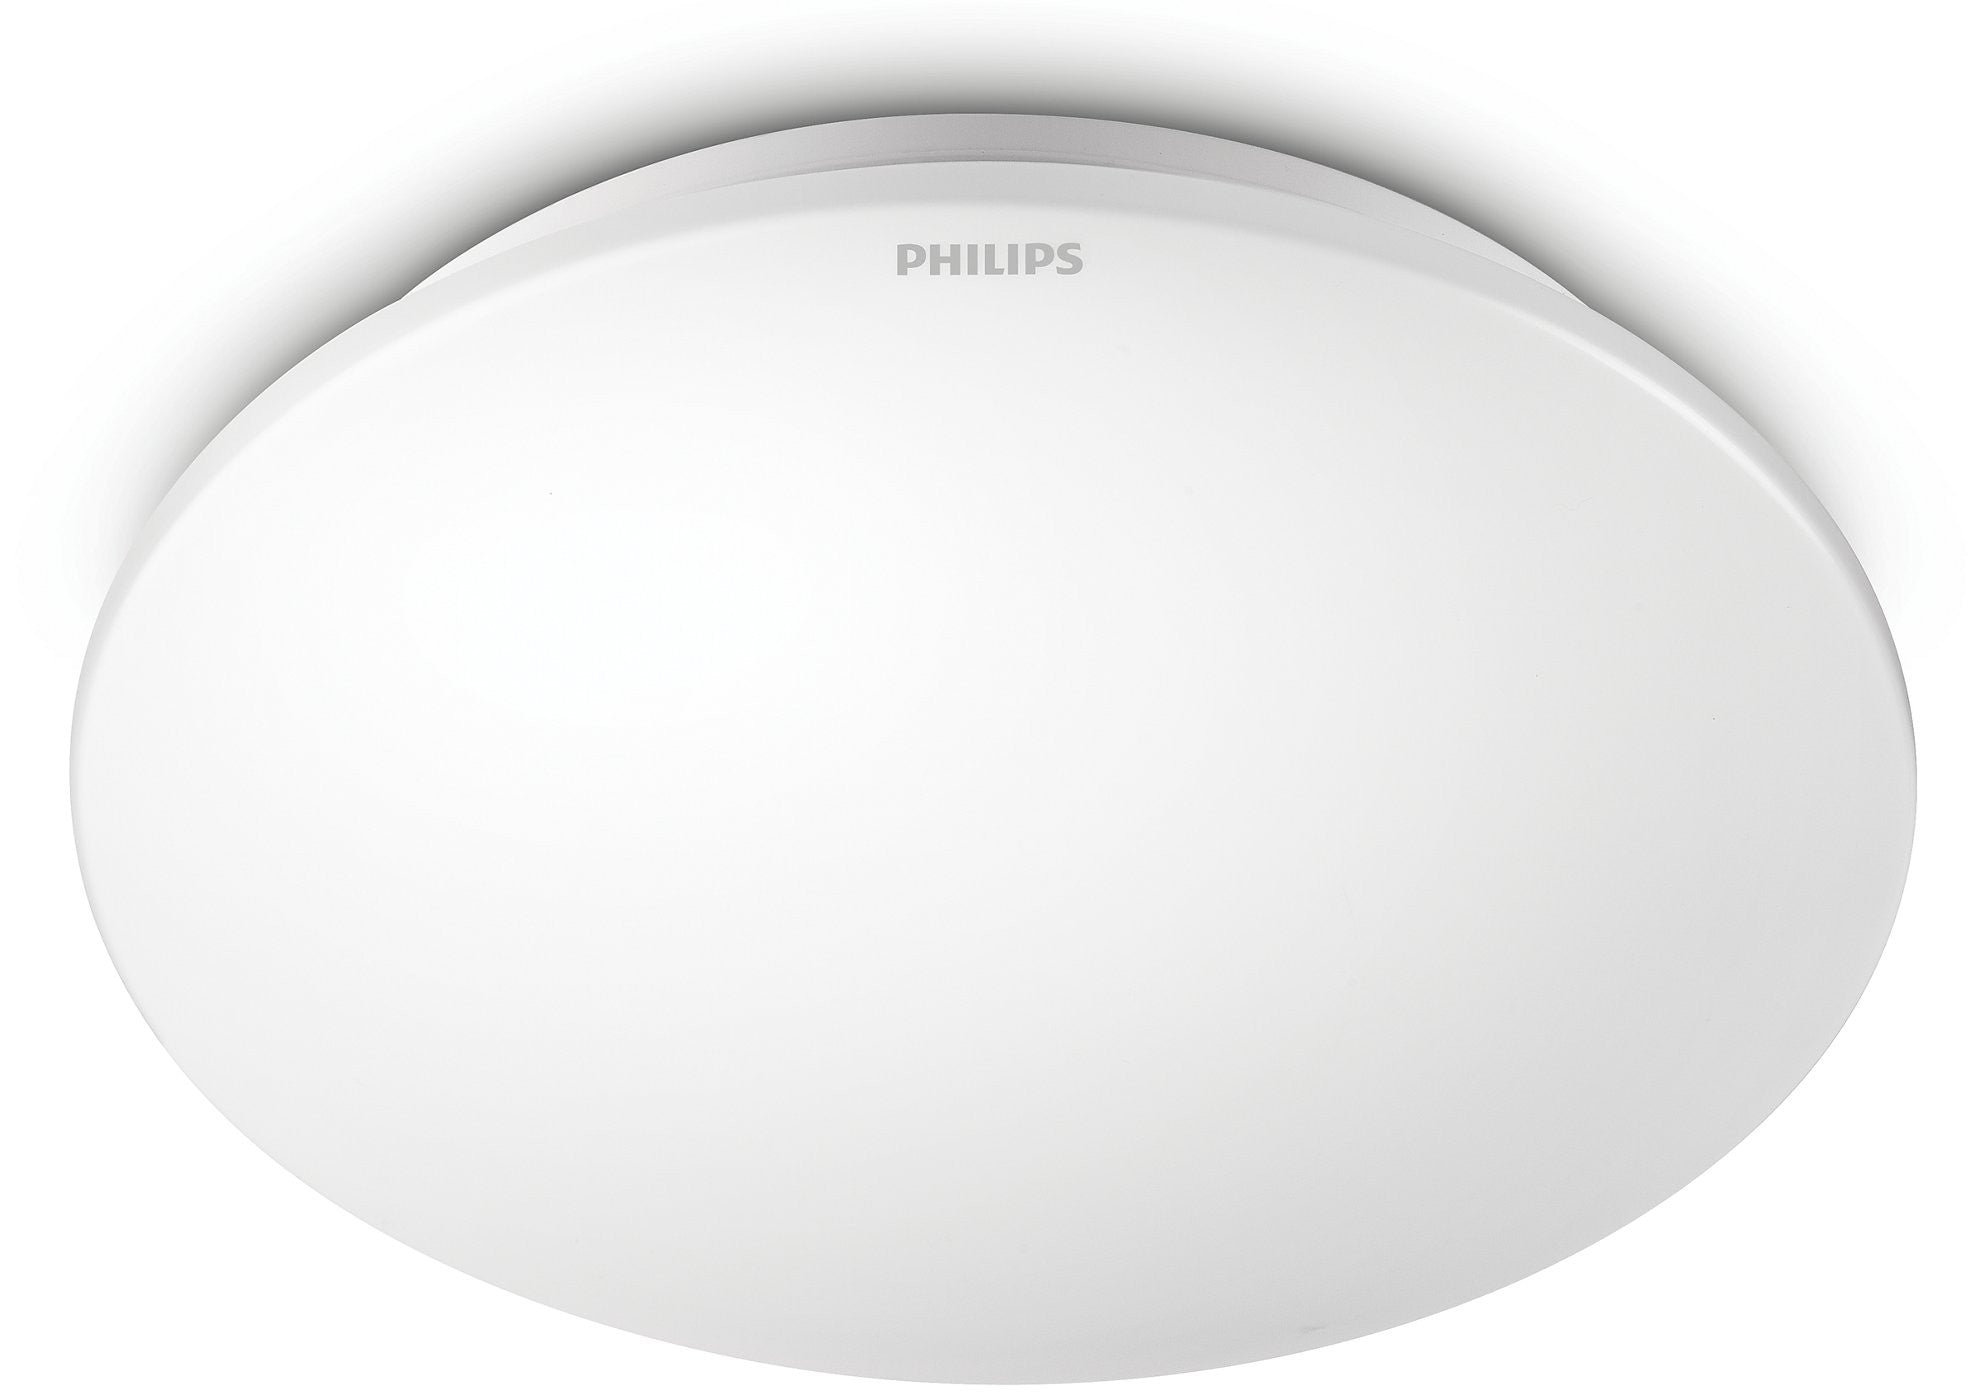 Philips Led Ceiling Light 6500k Cool Daylight Crystal White 16w